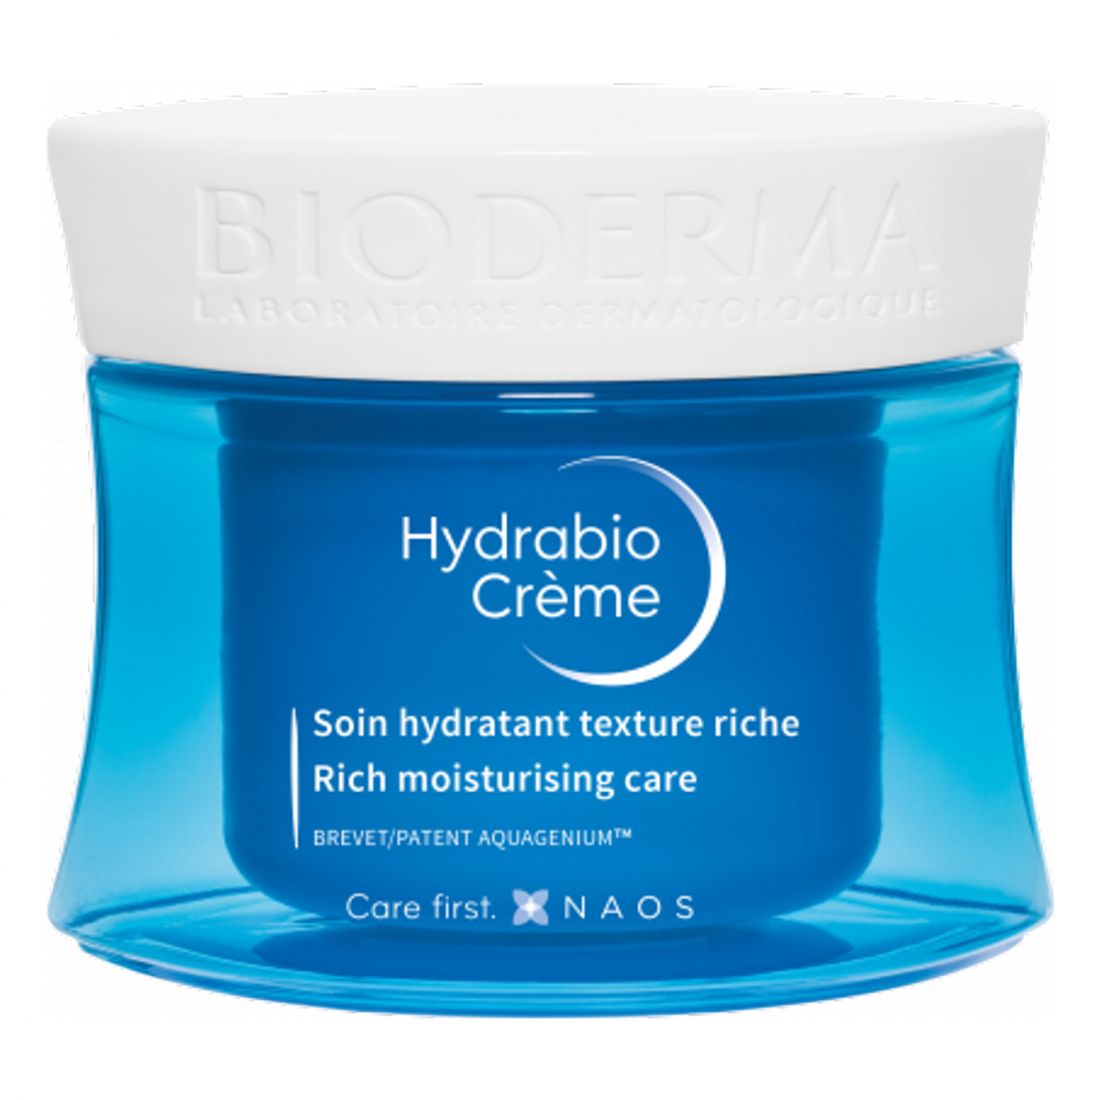 Bioderma - Crème visage 'Hydrabio' - 50 ml